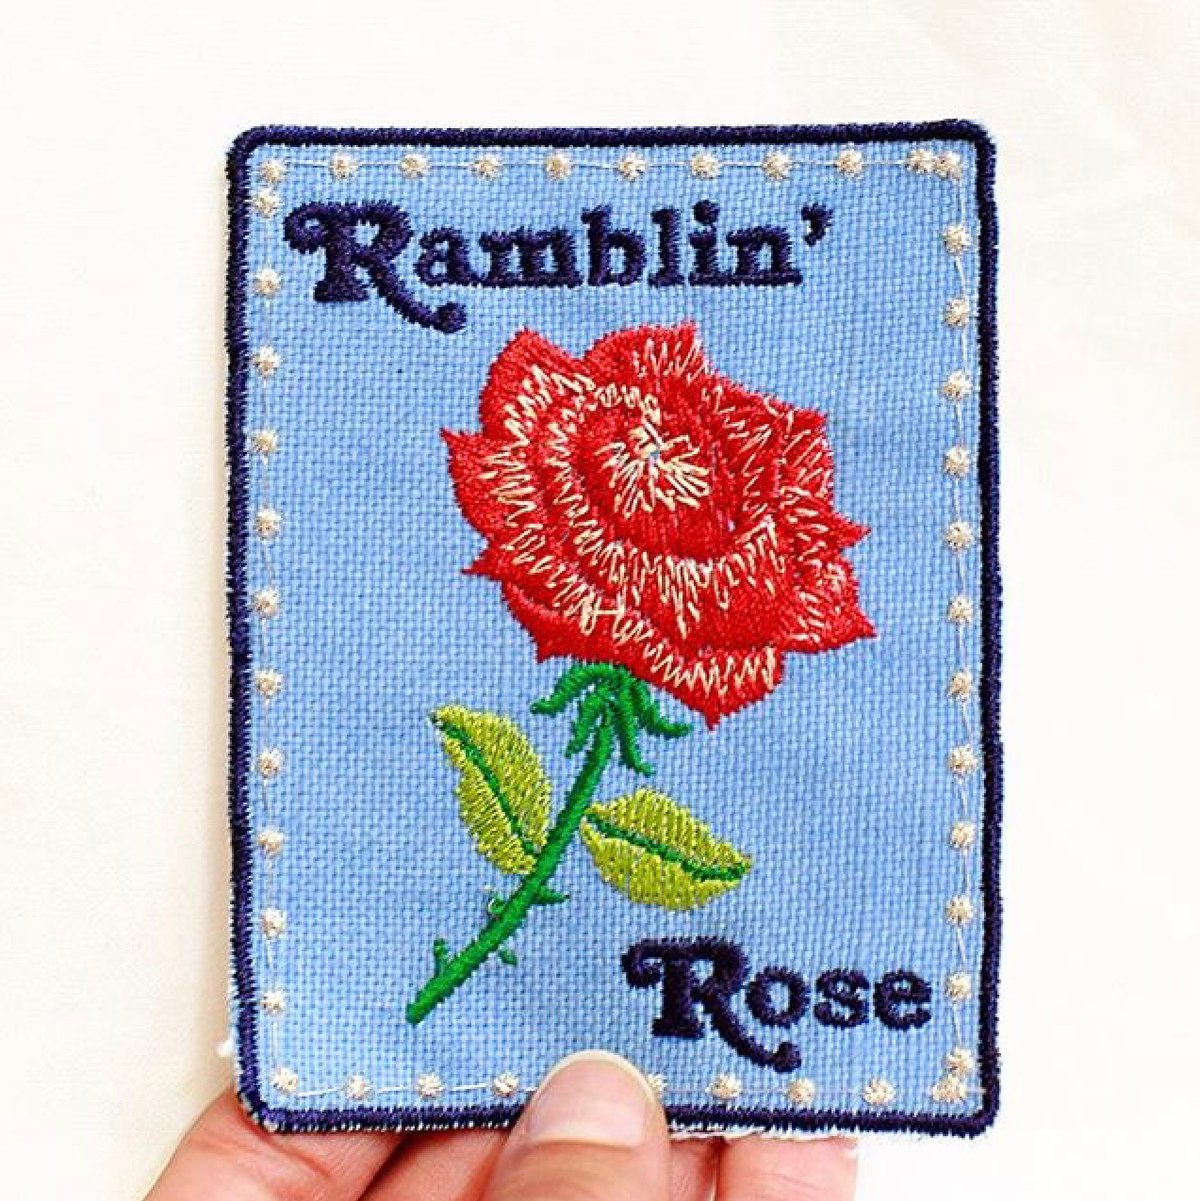 Ramblin’ Rose Handmade Patch! 3x4